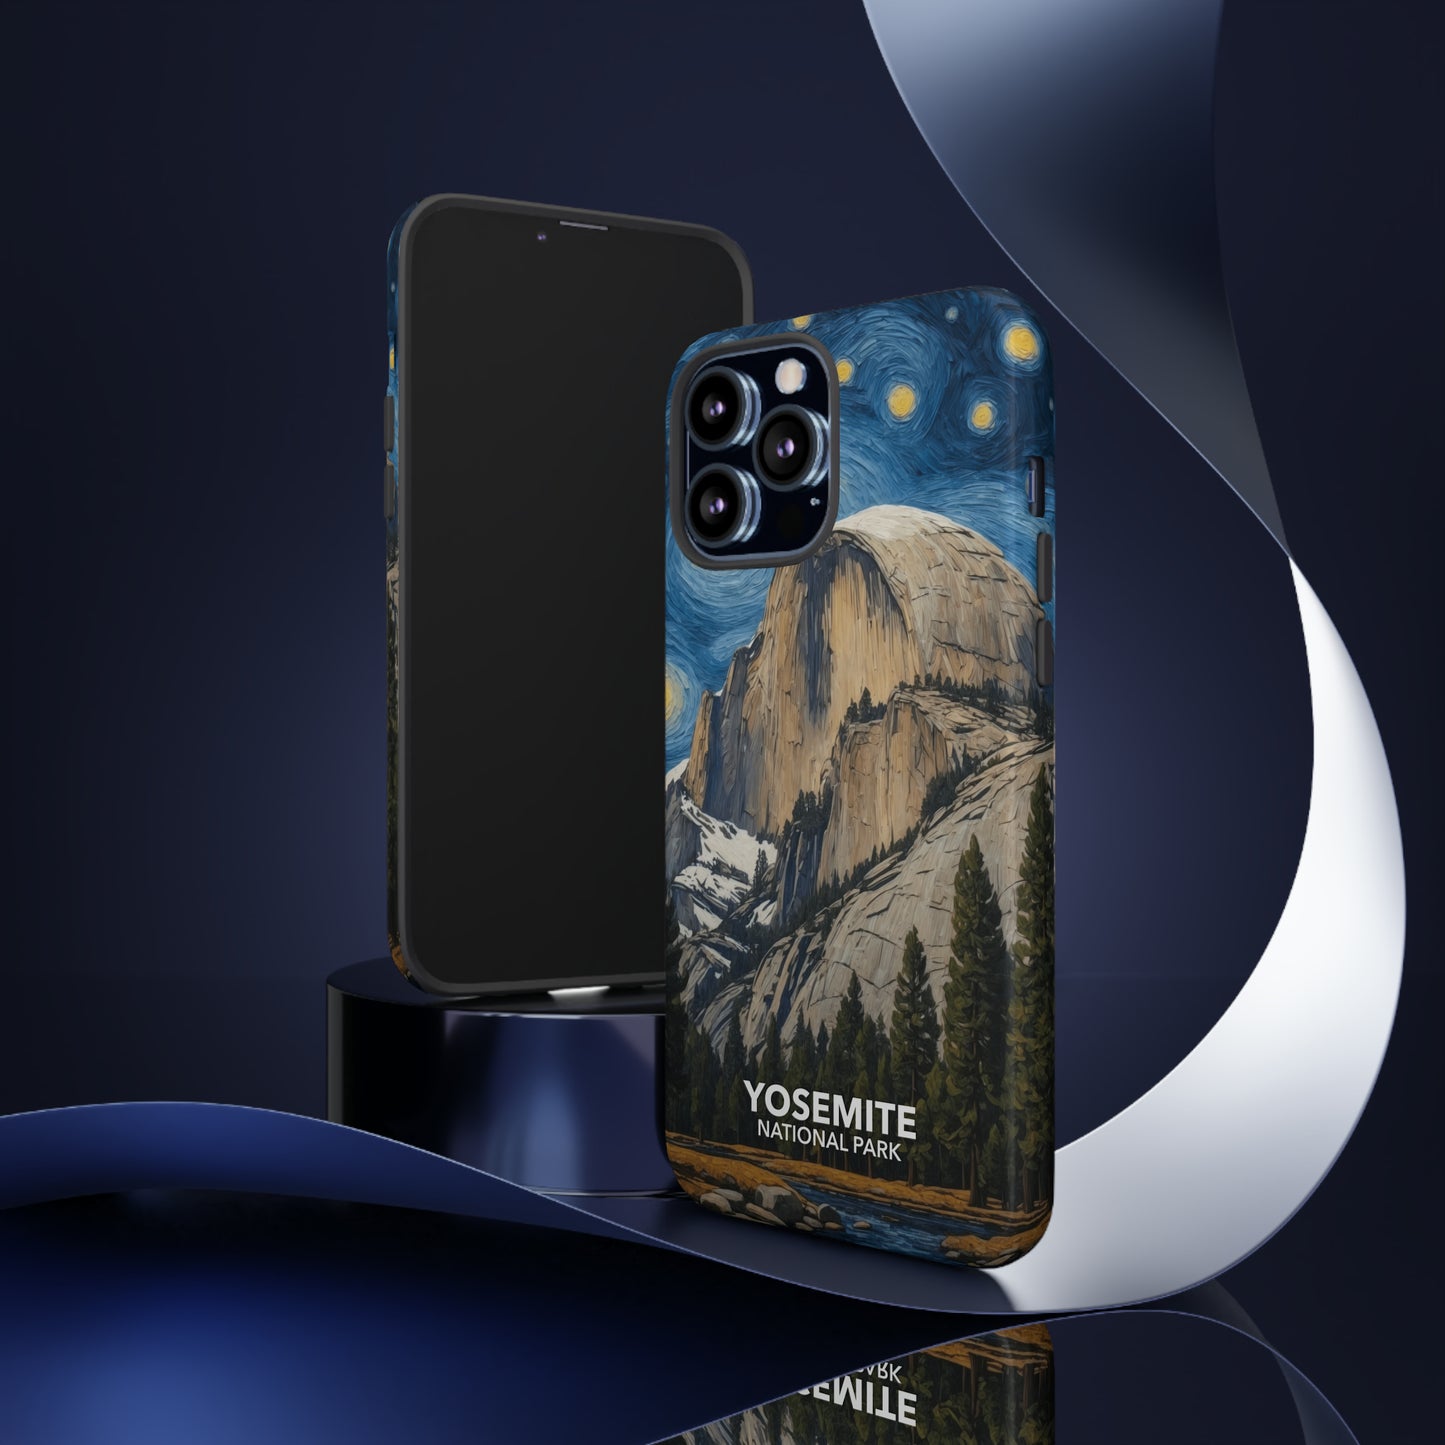 Yosemite National Park Phone Case - Starry Night